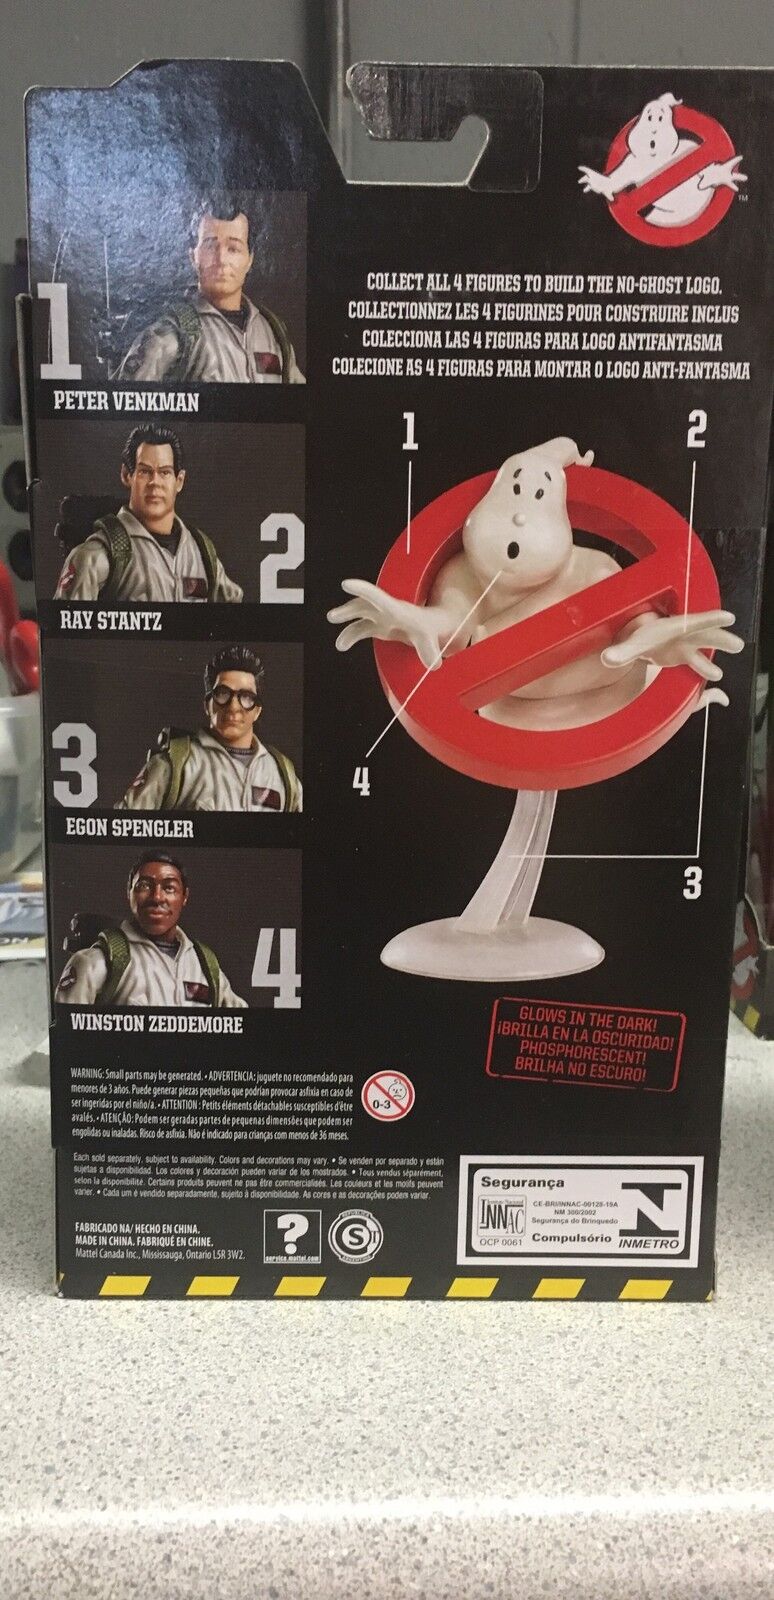 Ghostbusters 2016 New Ray Stantz 6' Figure Walmart Exclusive